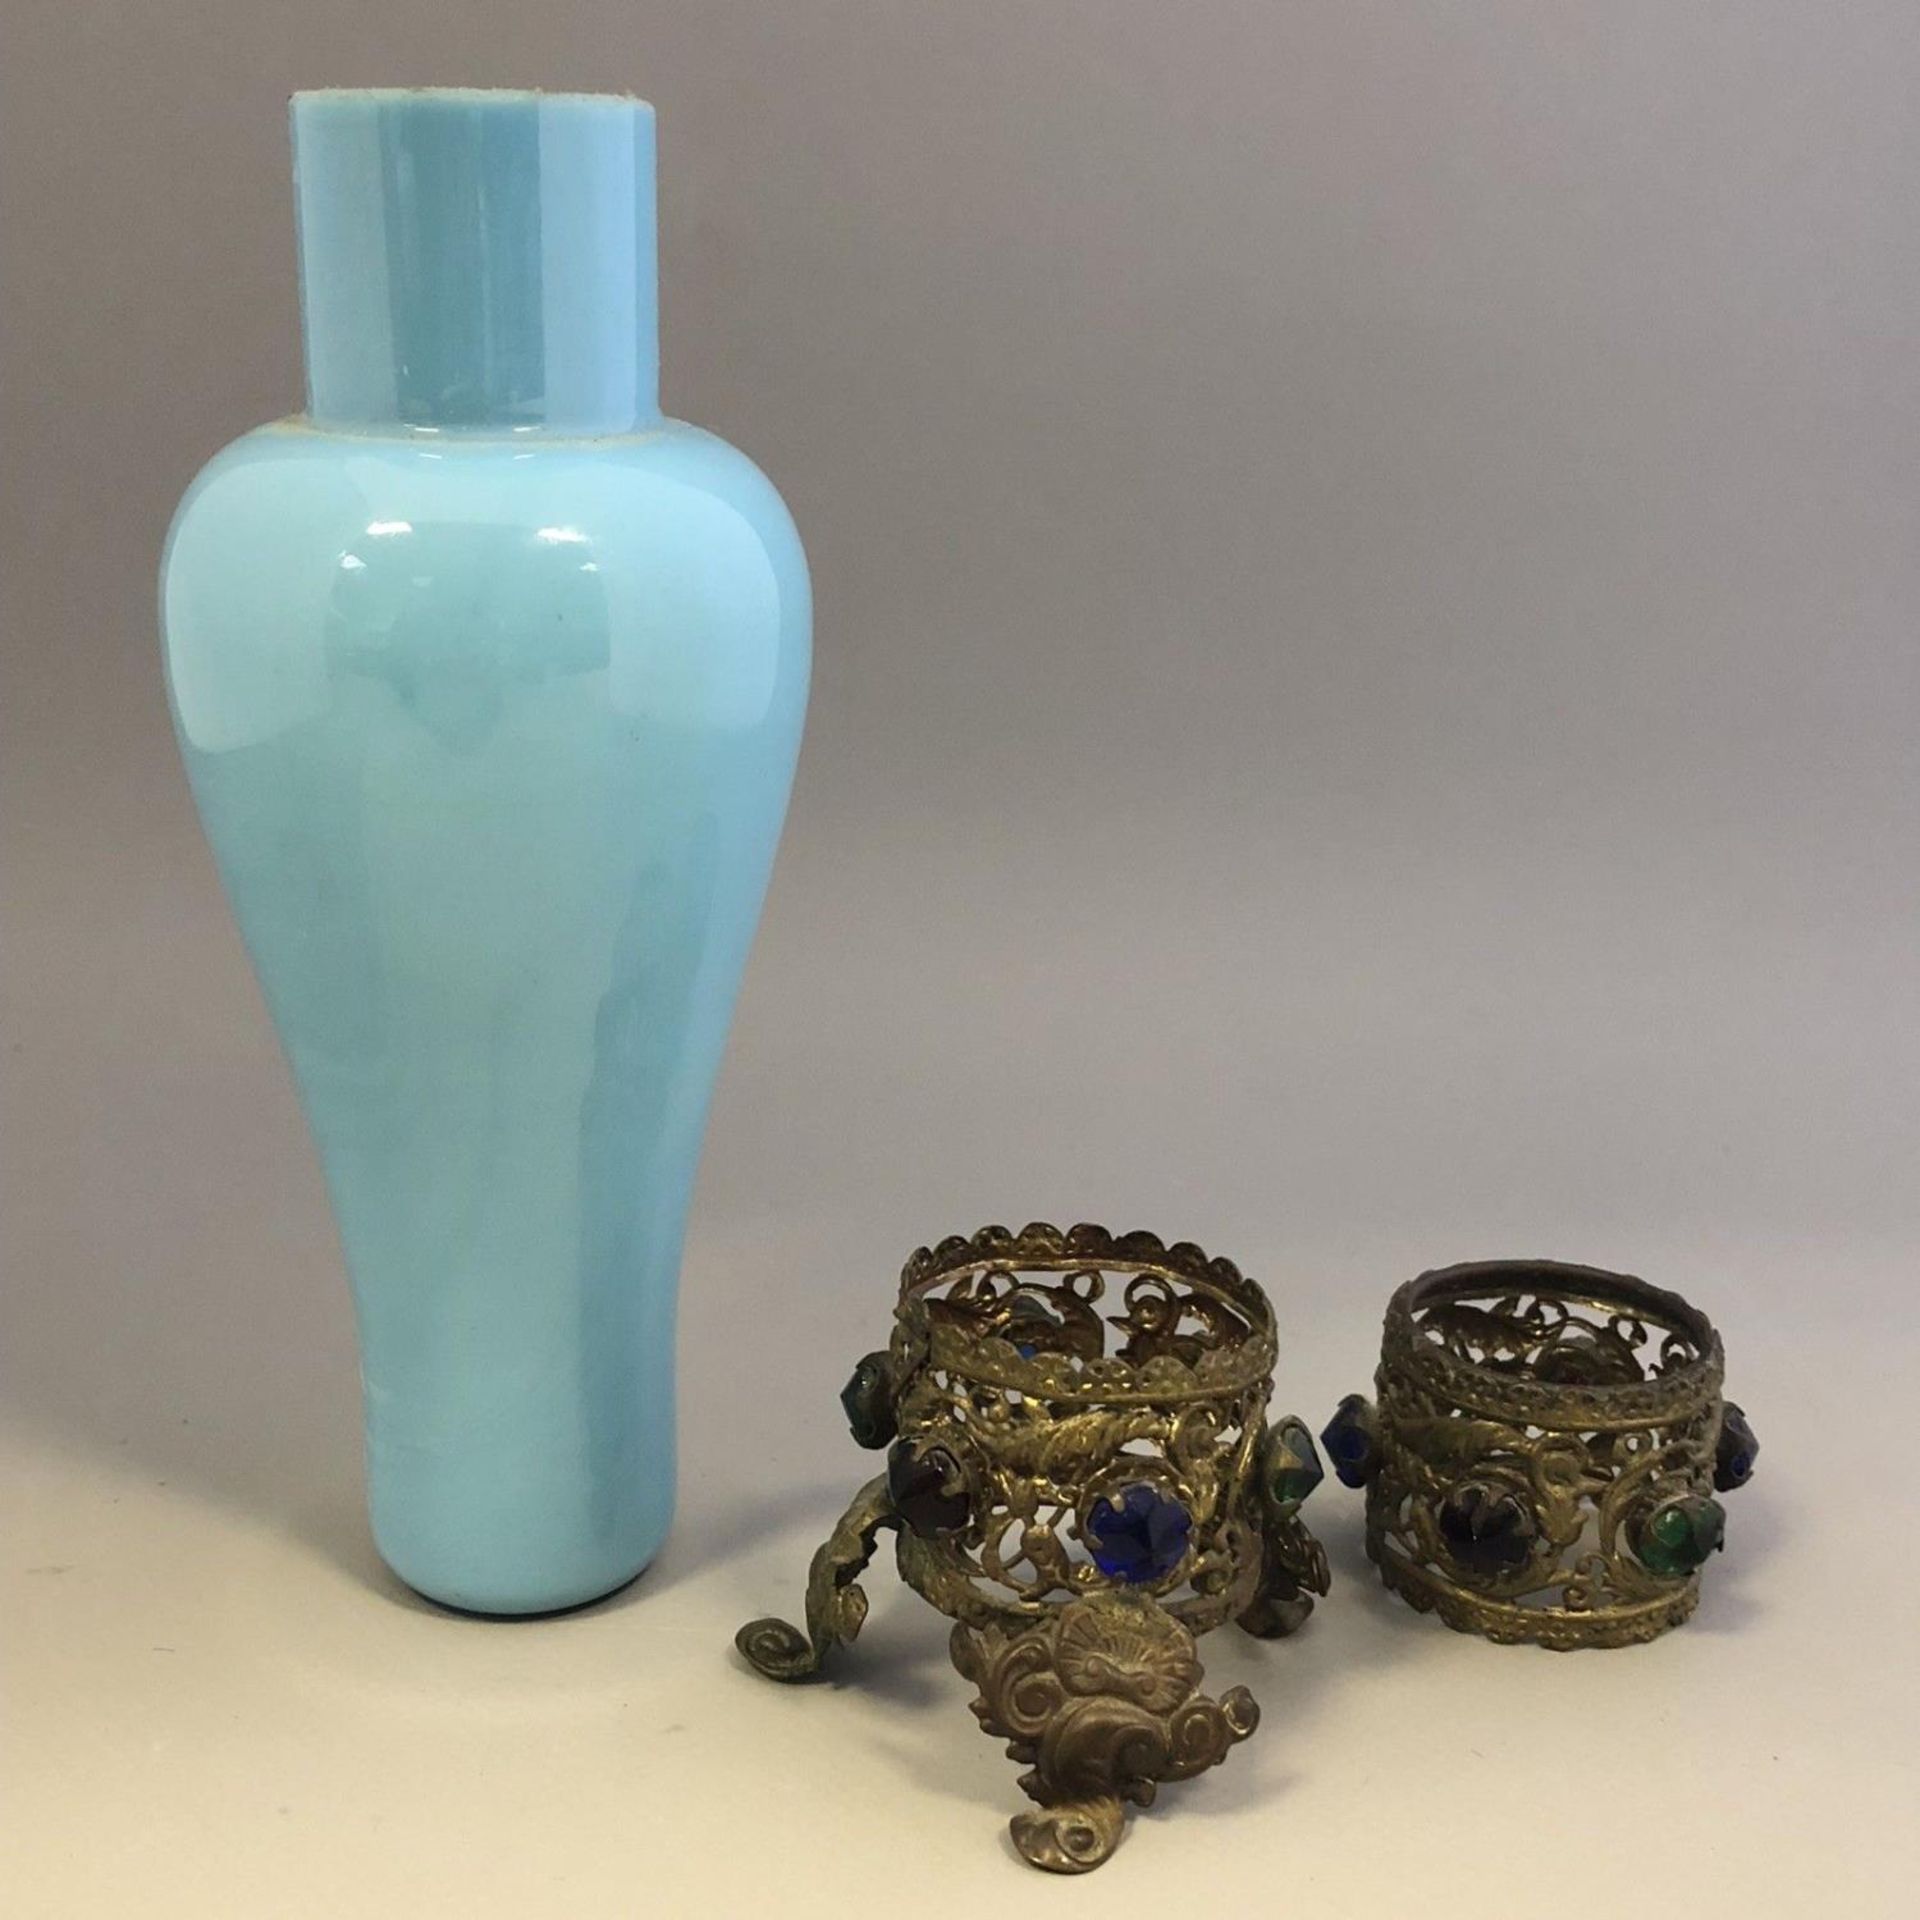 French blue opaline glass vase/perfume bottle gilt metal jewelled mounts - 19thC - Image 4 of 4